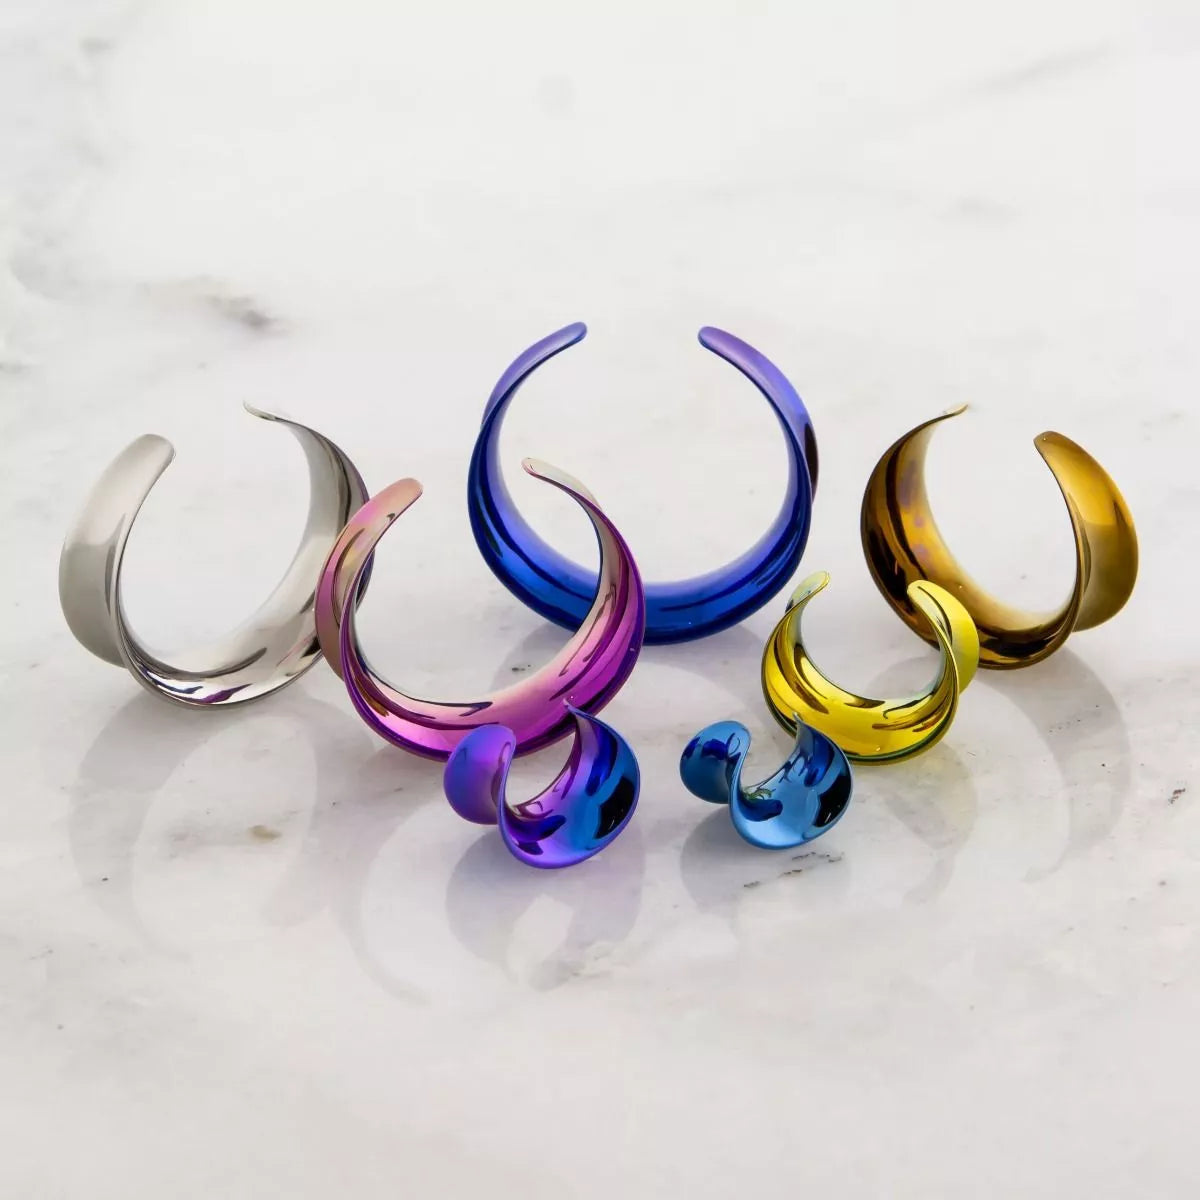 Plugs Earrings - Ear Saddle Rosy Gold Titanium Ear Saddle Plug - 1 Piece - Special -Rebel Bod-RebelBod